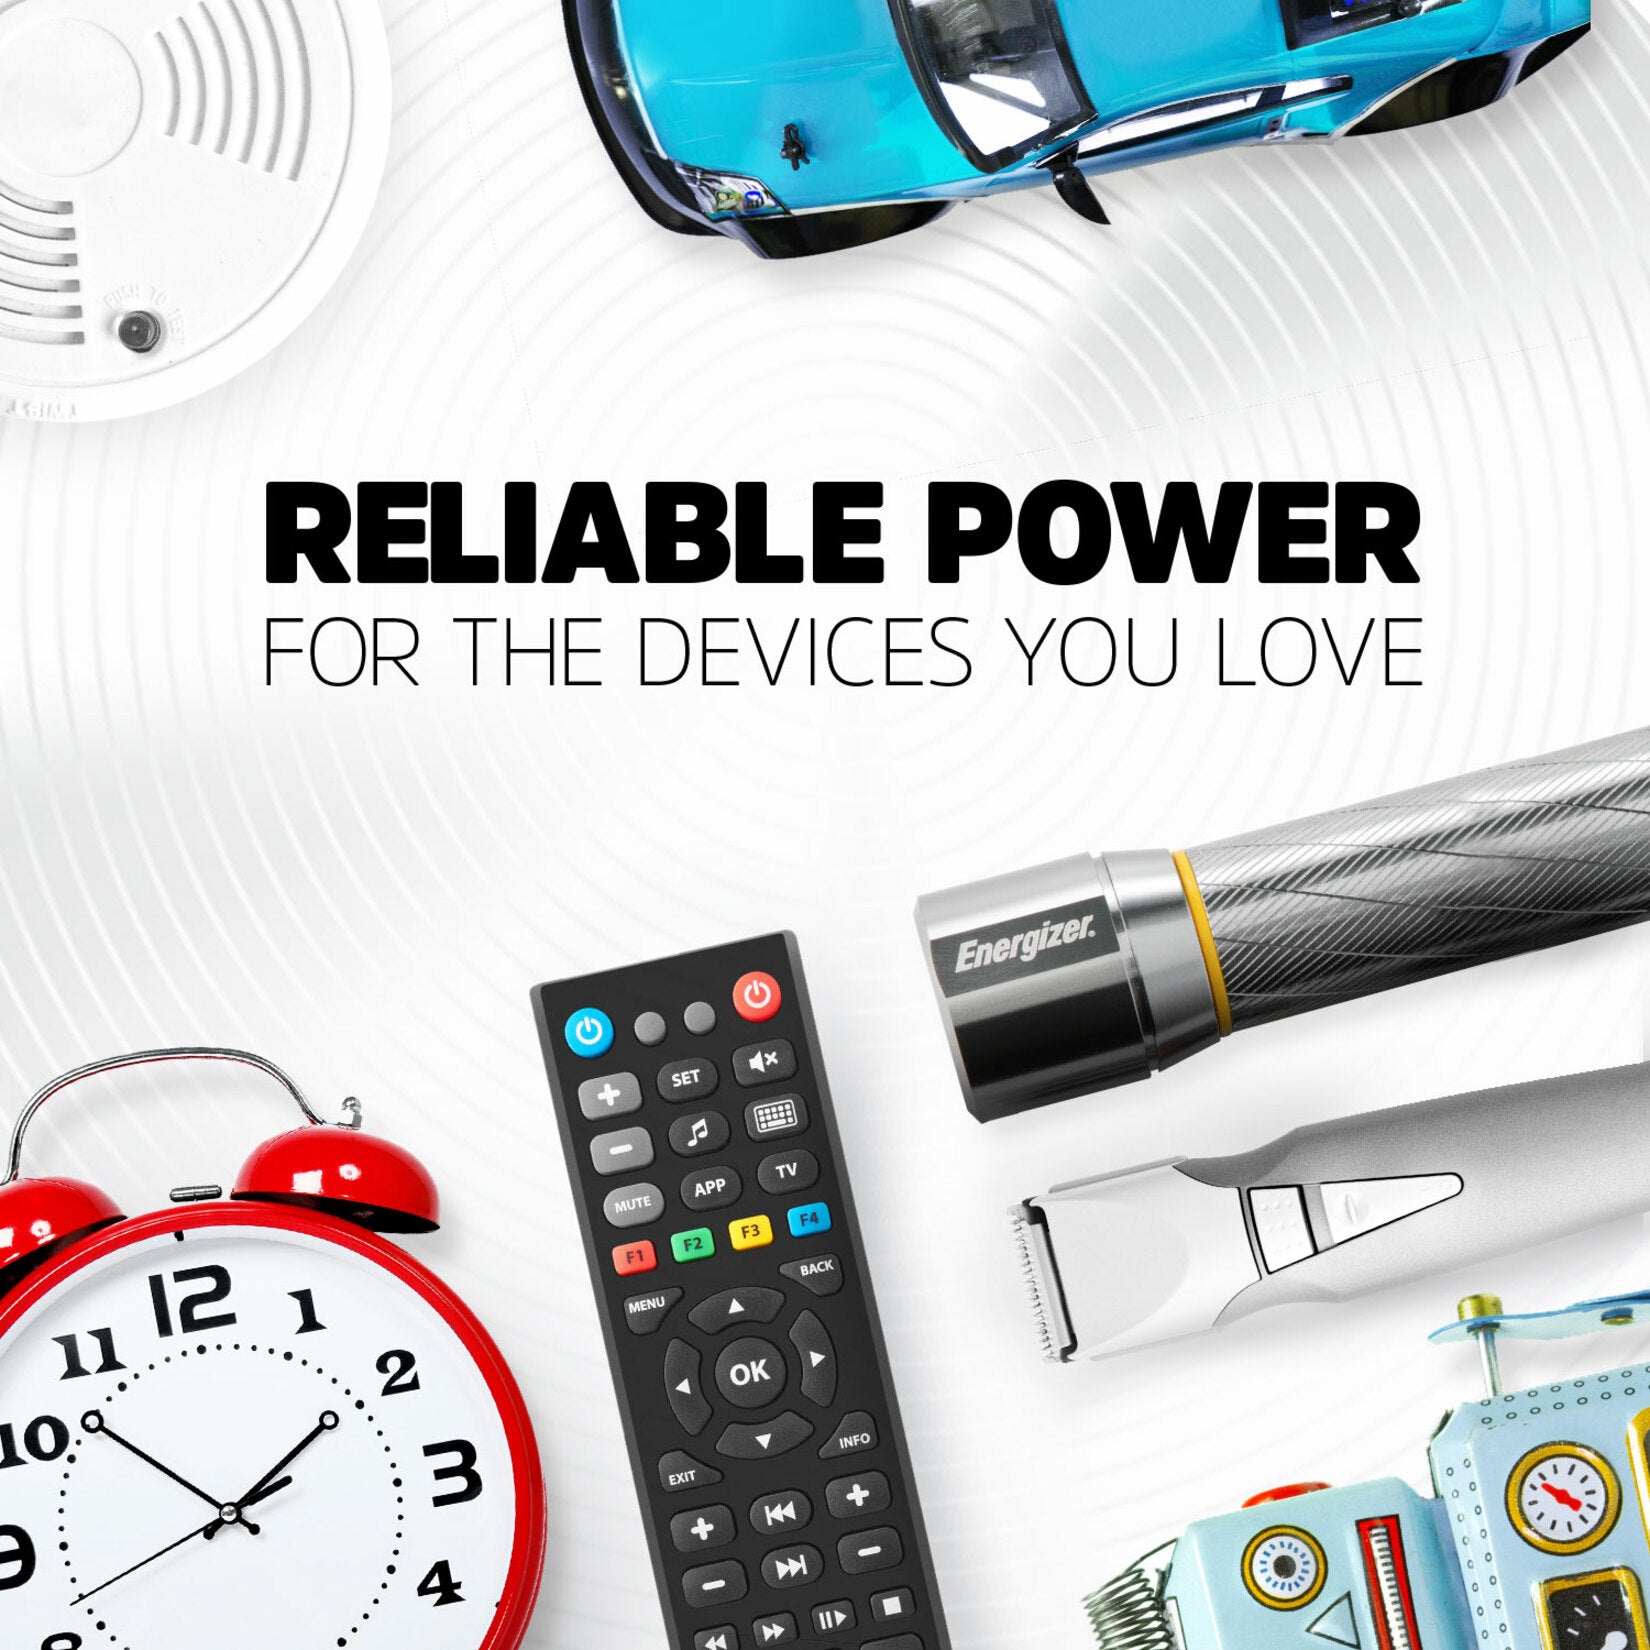 Energizer 522BP MAX Alkaline 9 Volt Batteries, Long-lasting Power for Multipurpose Devices